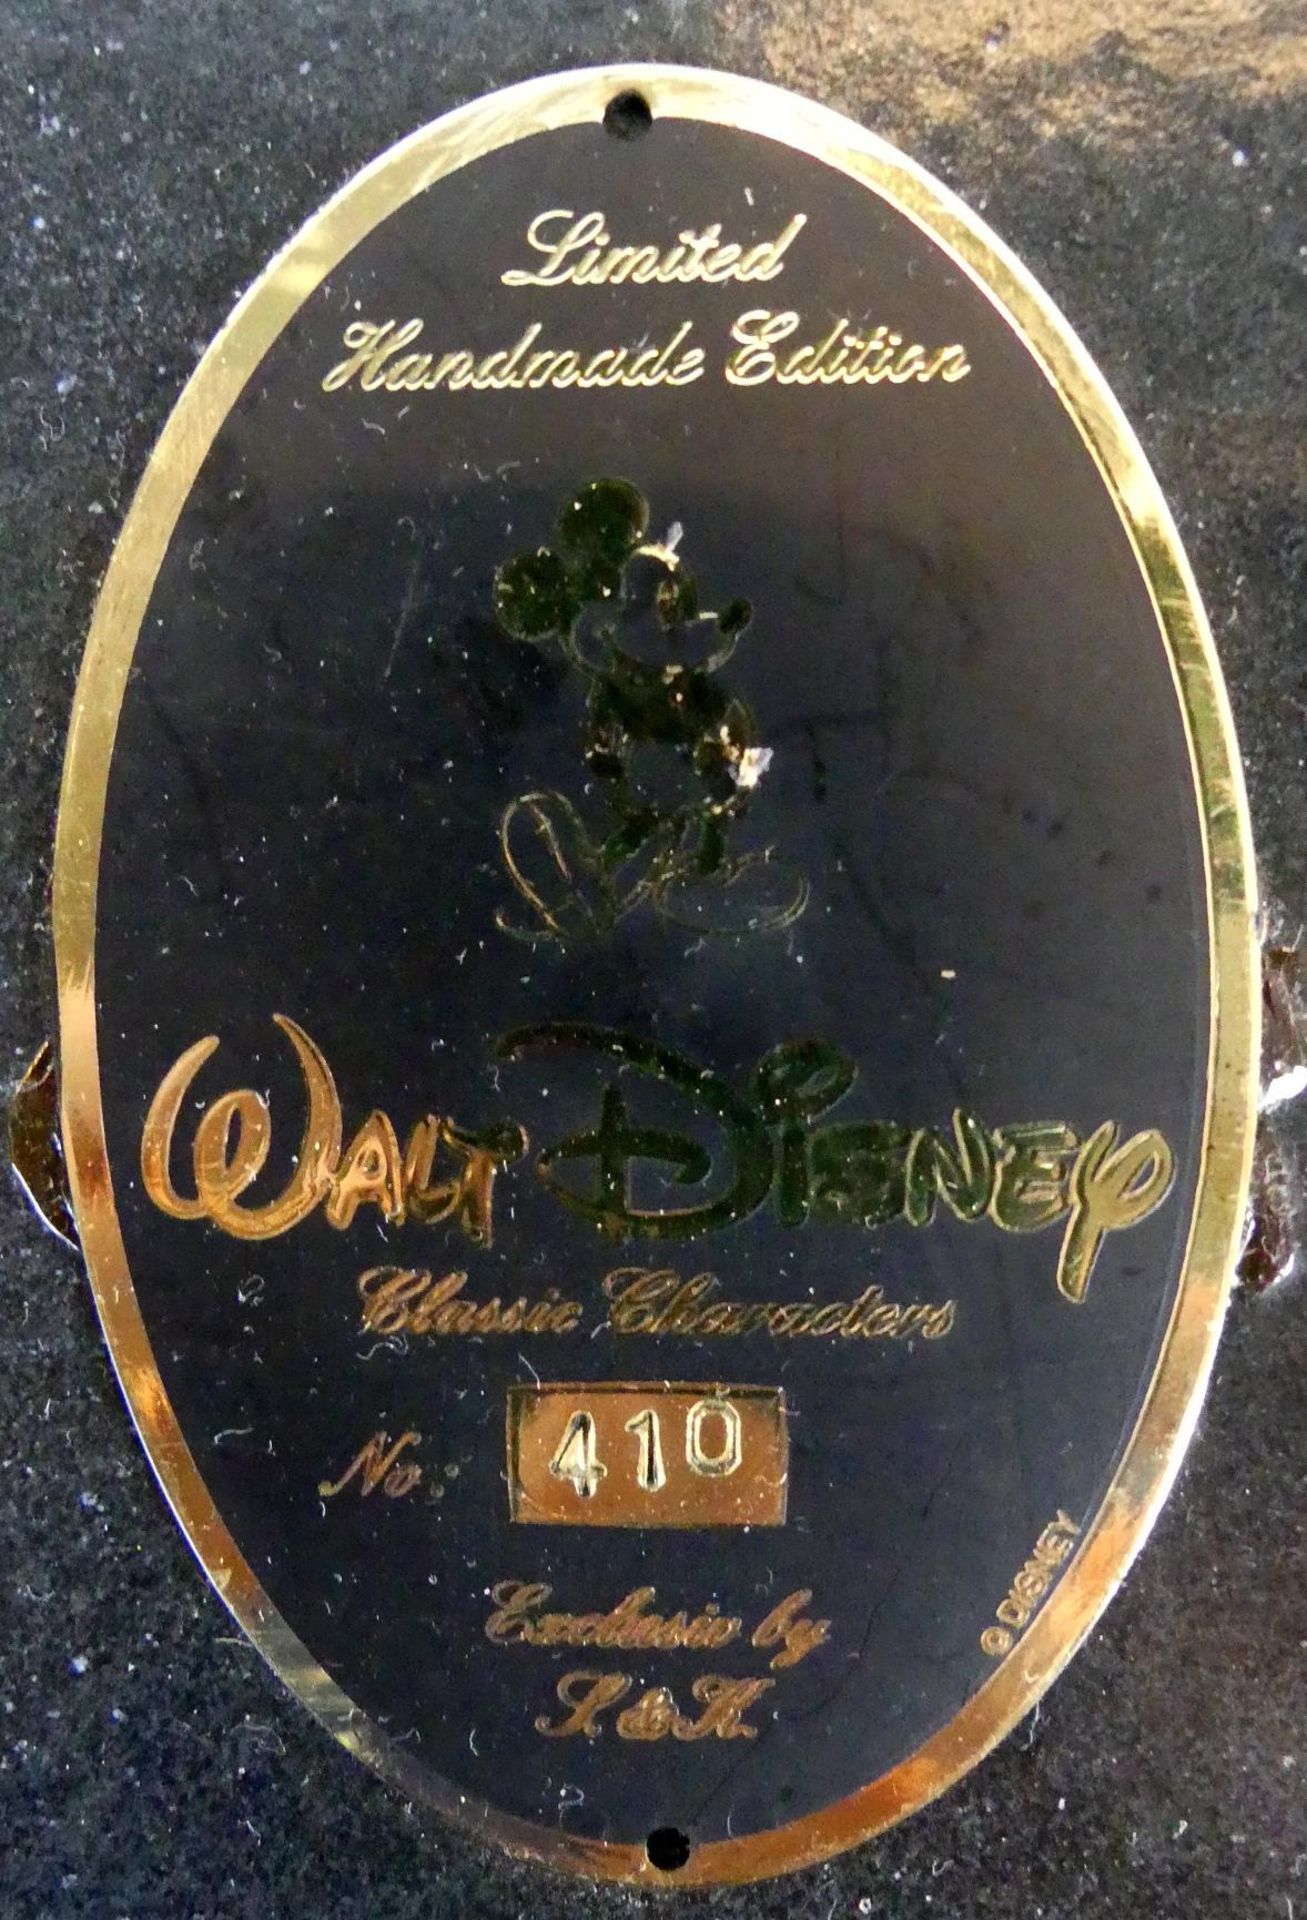 Blechschild, Mini Mouse, Walt Disney, oval, Limited Handmade Edition, - Image 2 of 2